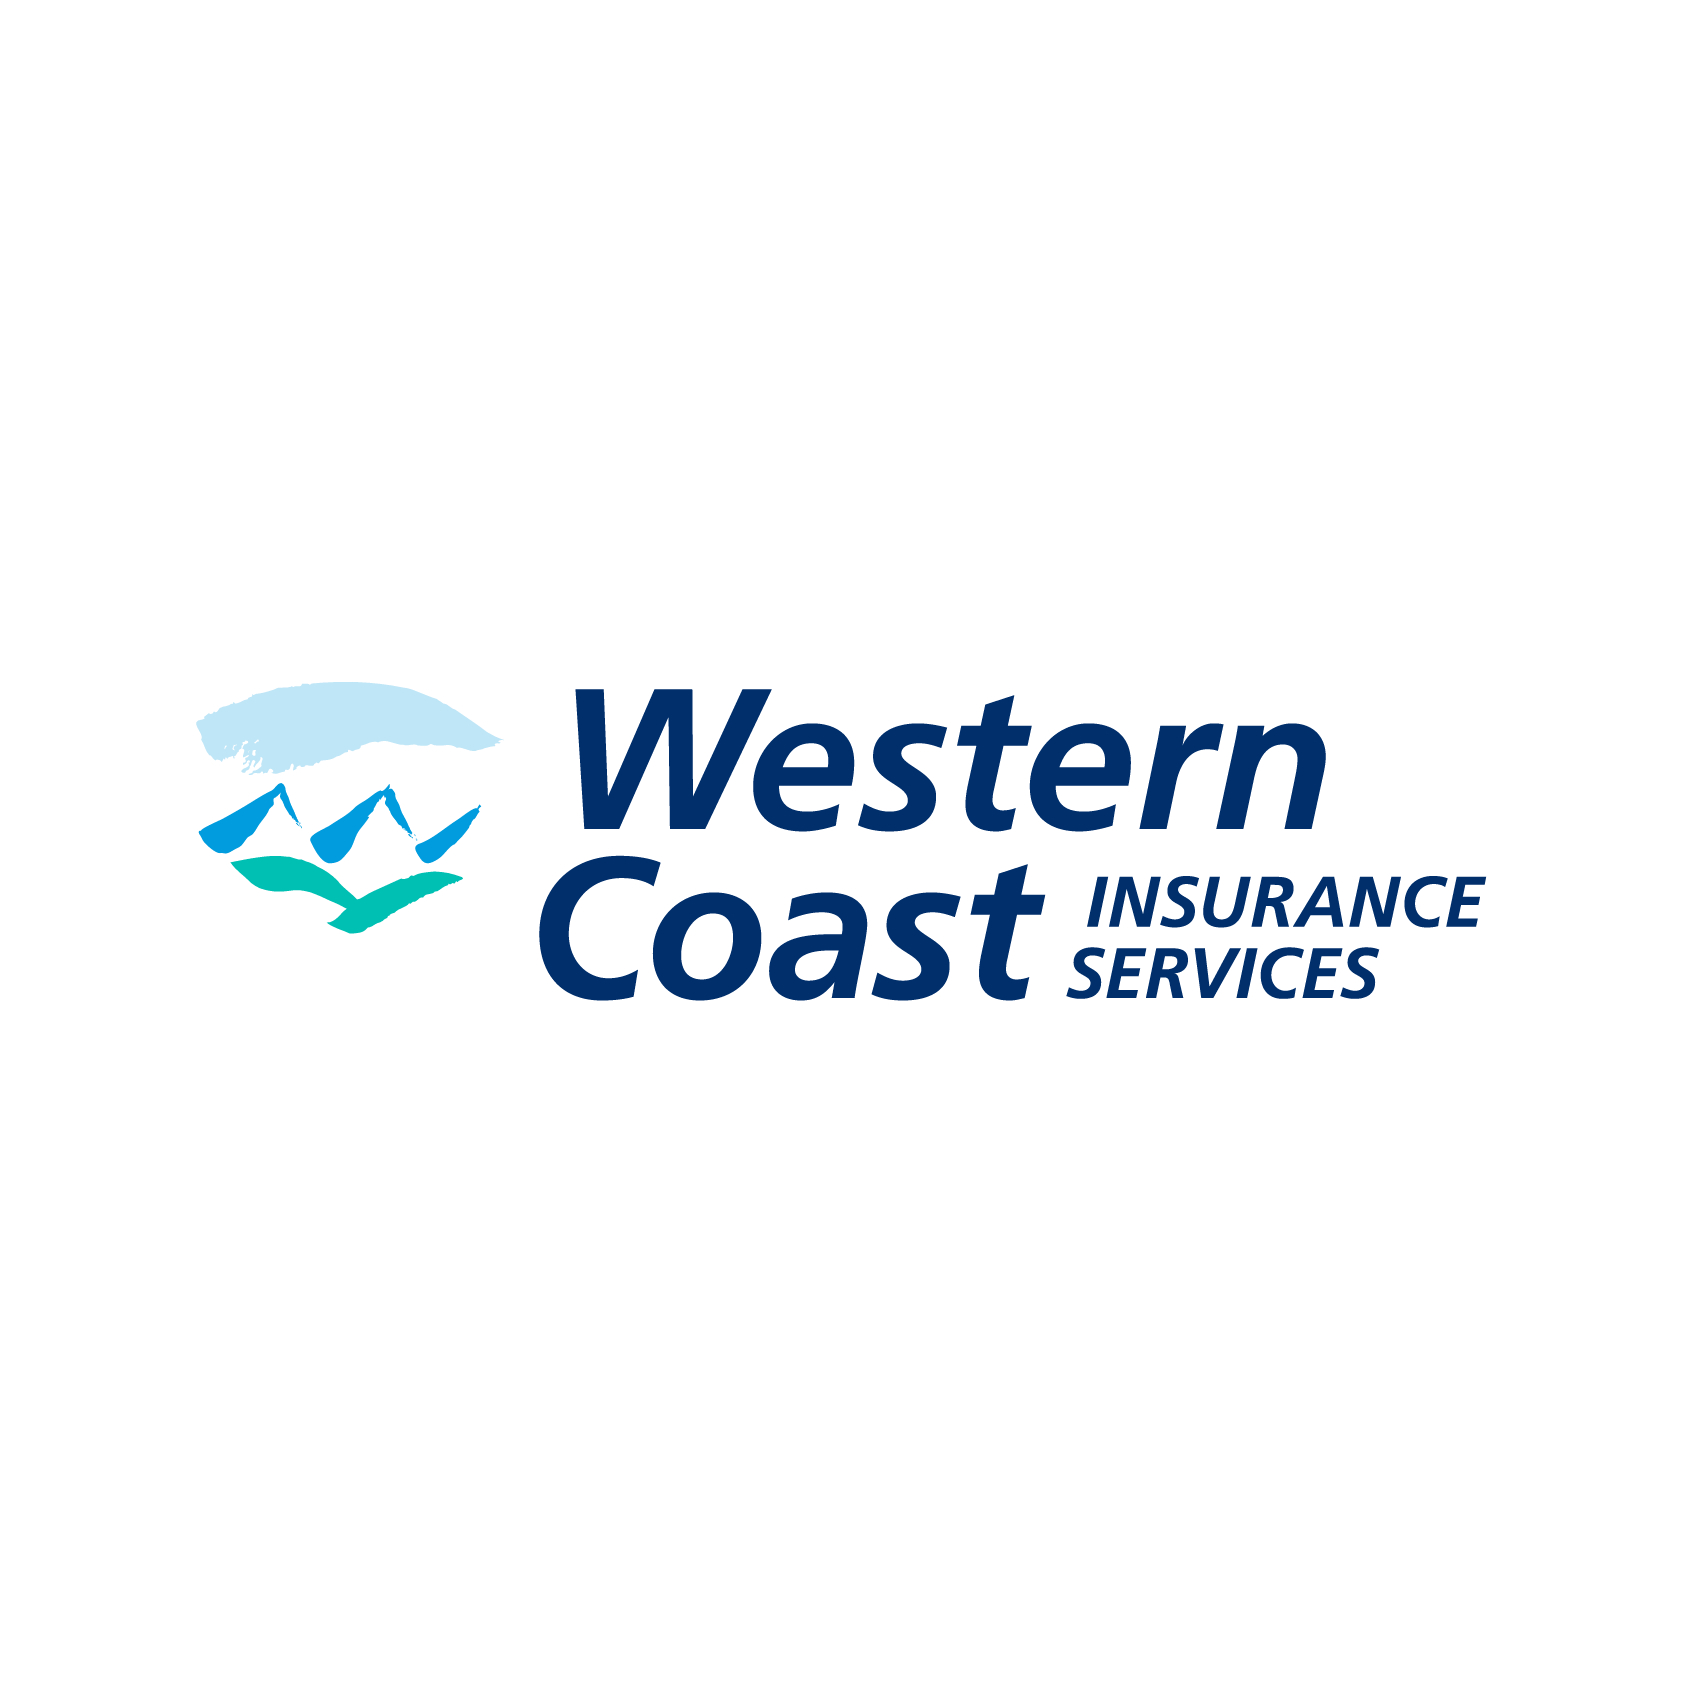 Western Coast Insurance Services Ltd. | Home, Car & Business Insurance - Insurance